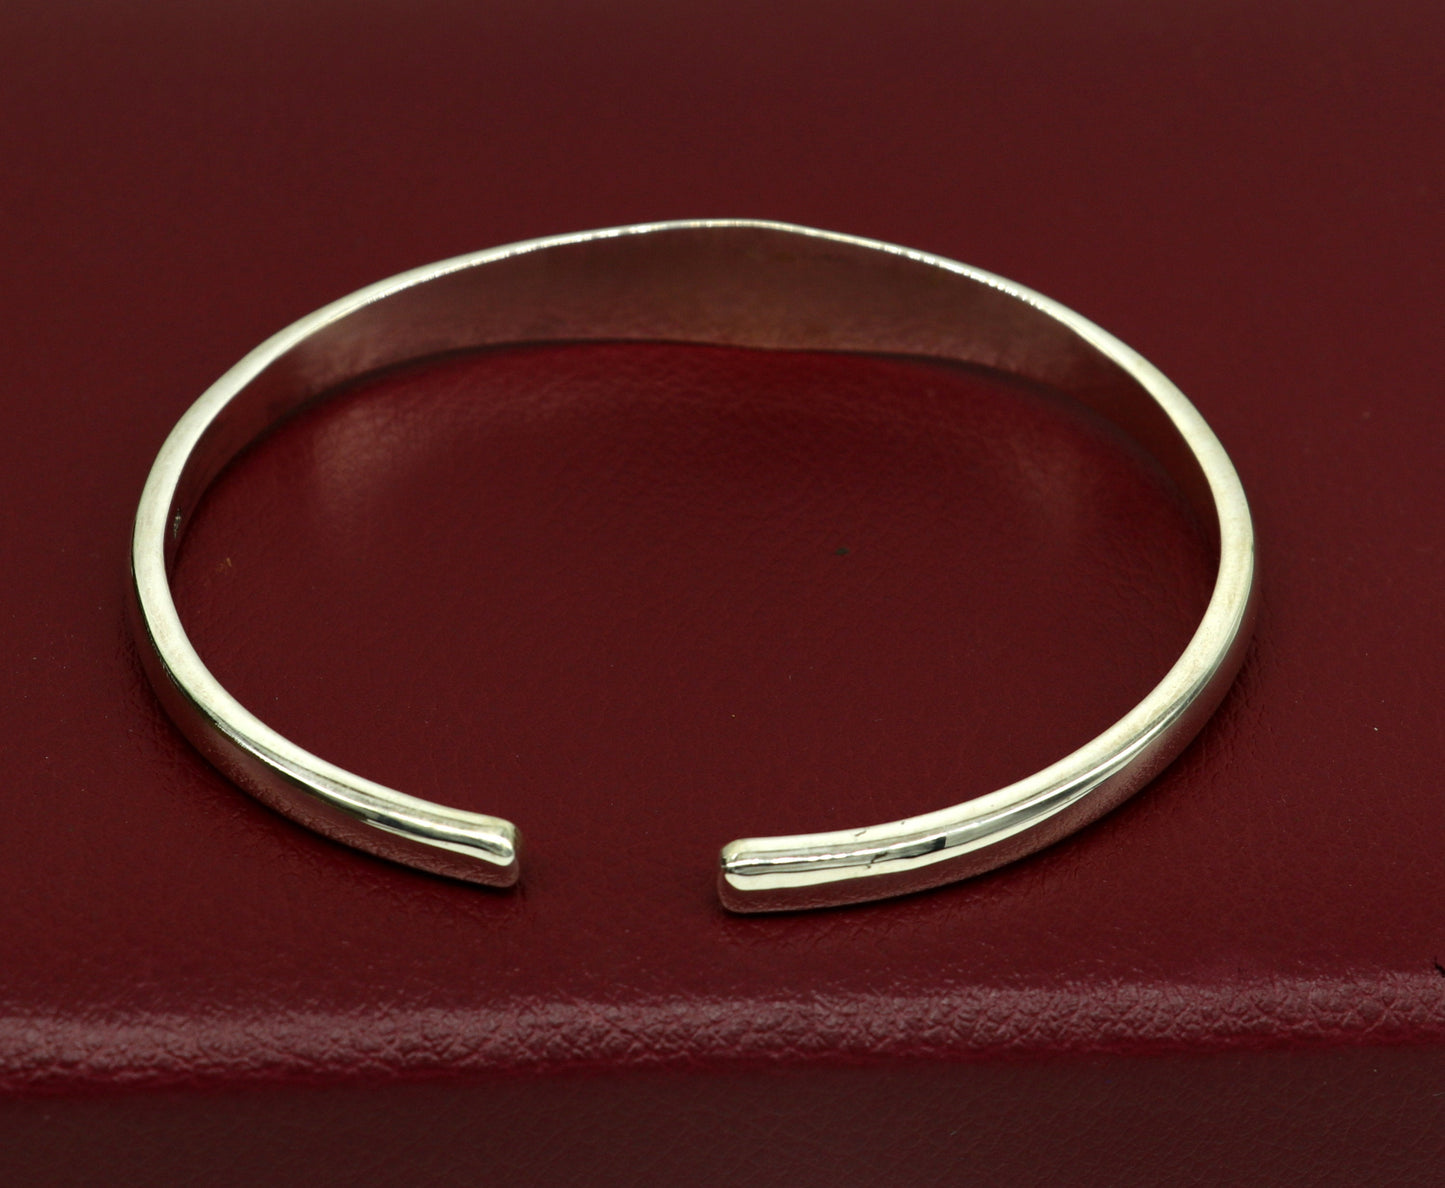 925 sterling silver handmade plain shine design adjustable bangle bracelet kada, unique design personalized kada bangle from india cuff53 - TRIBAL ORNAMENTS